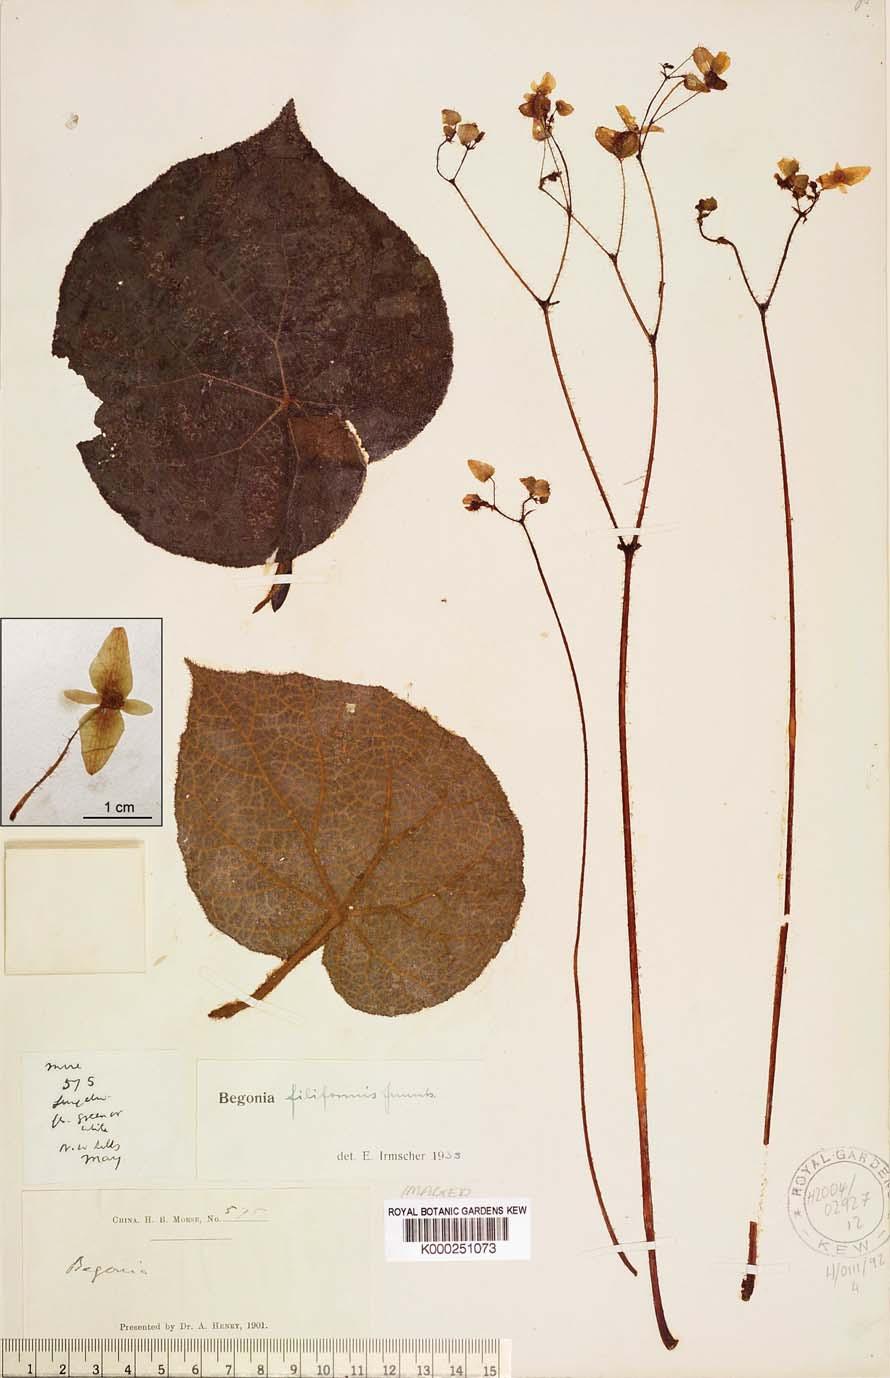 250 Botanical Bulletin of Academia Sinica, Vol. 46, 2005 Figure 6.